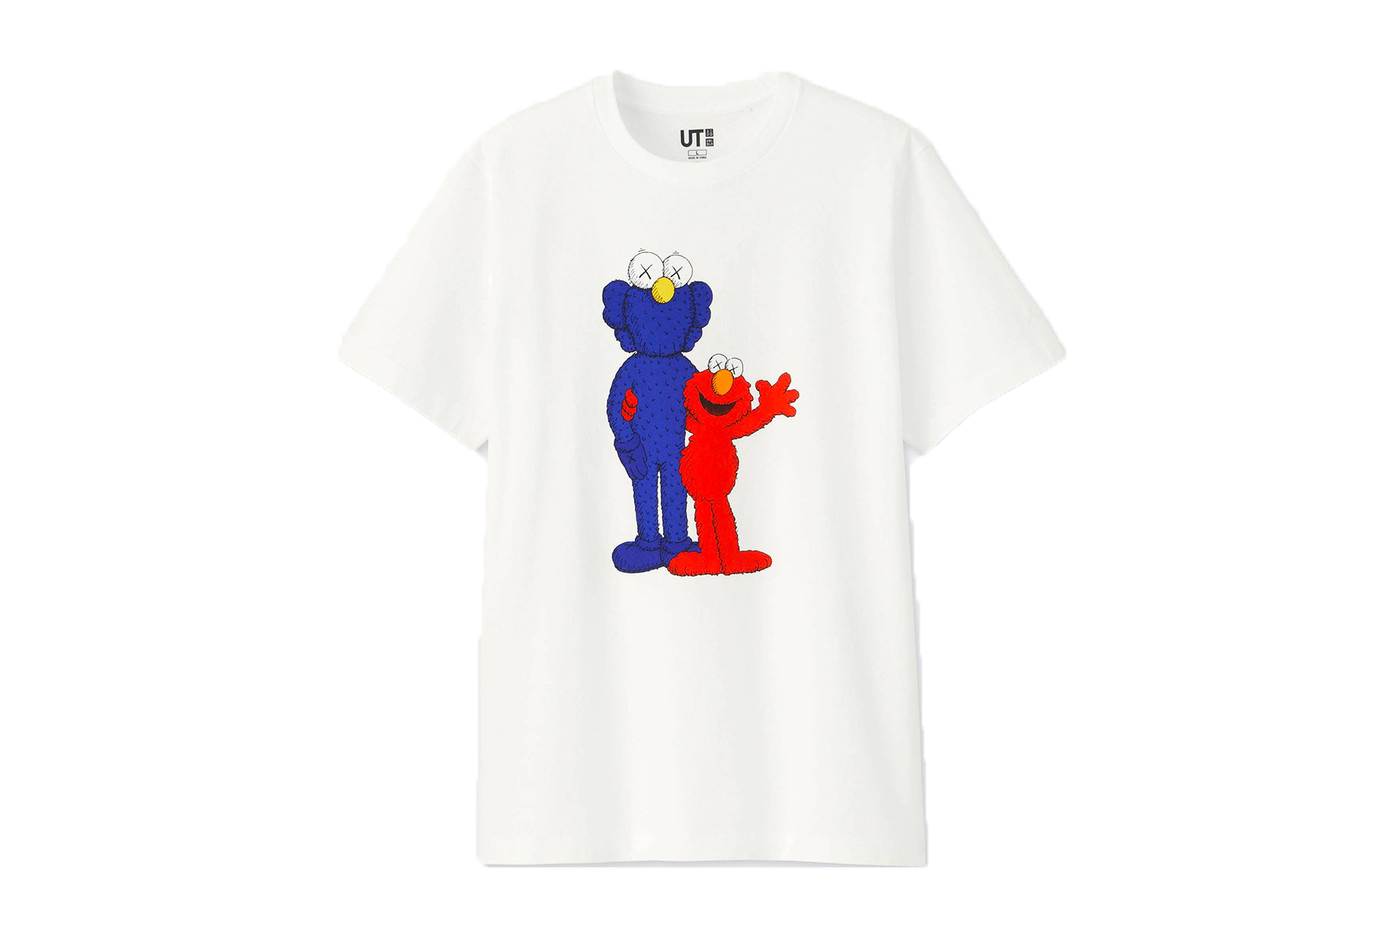 KAWS Uniqlo x Sesame Street Group 2 Shirt